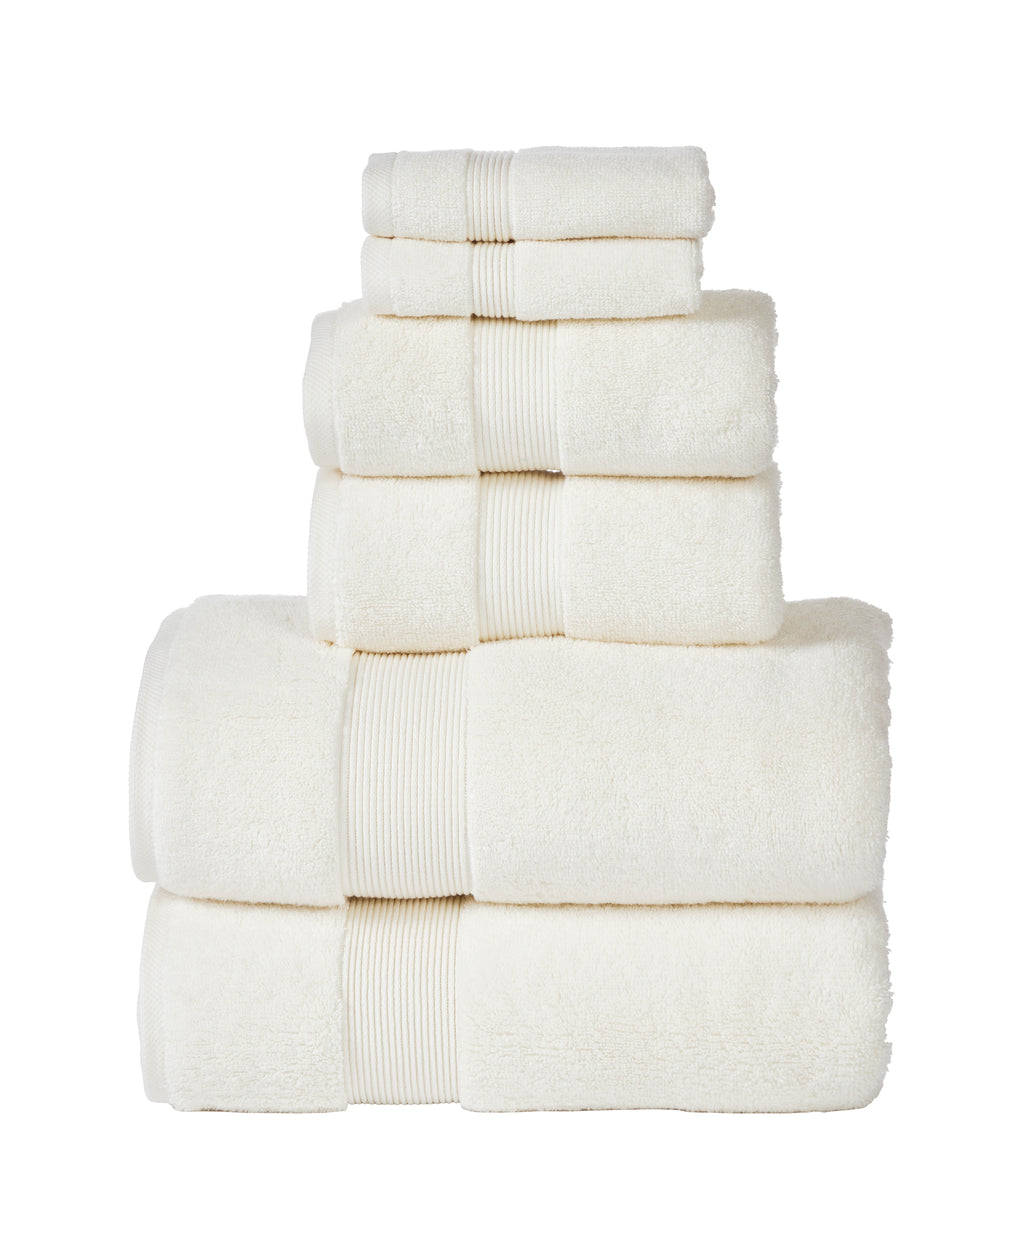 703 GSM 6 Piece Towels Set - Ivory